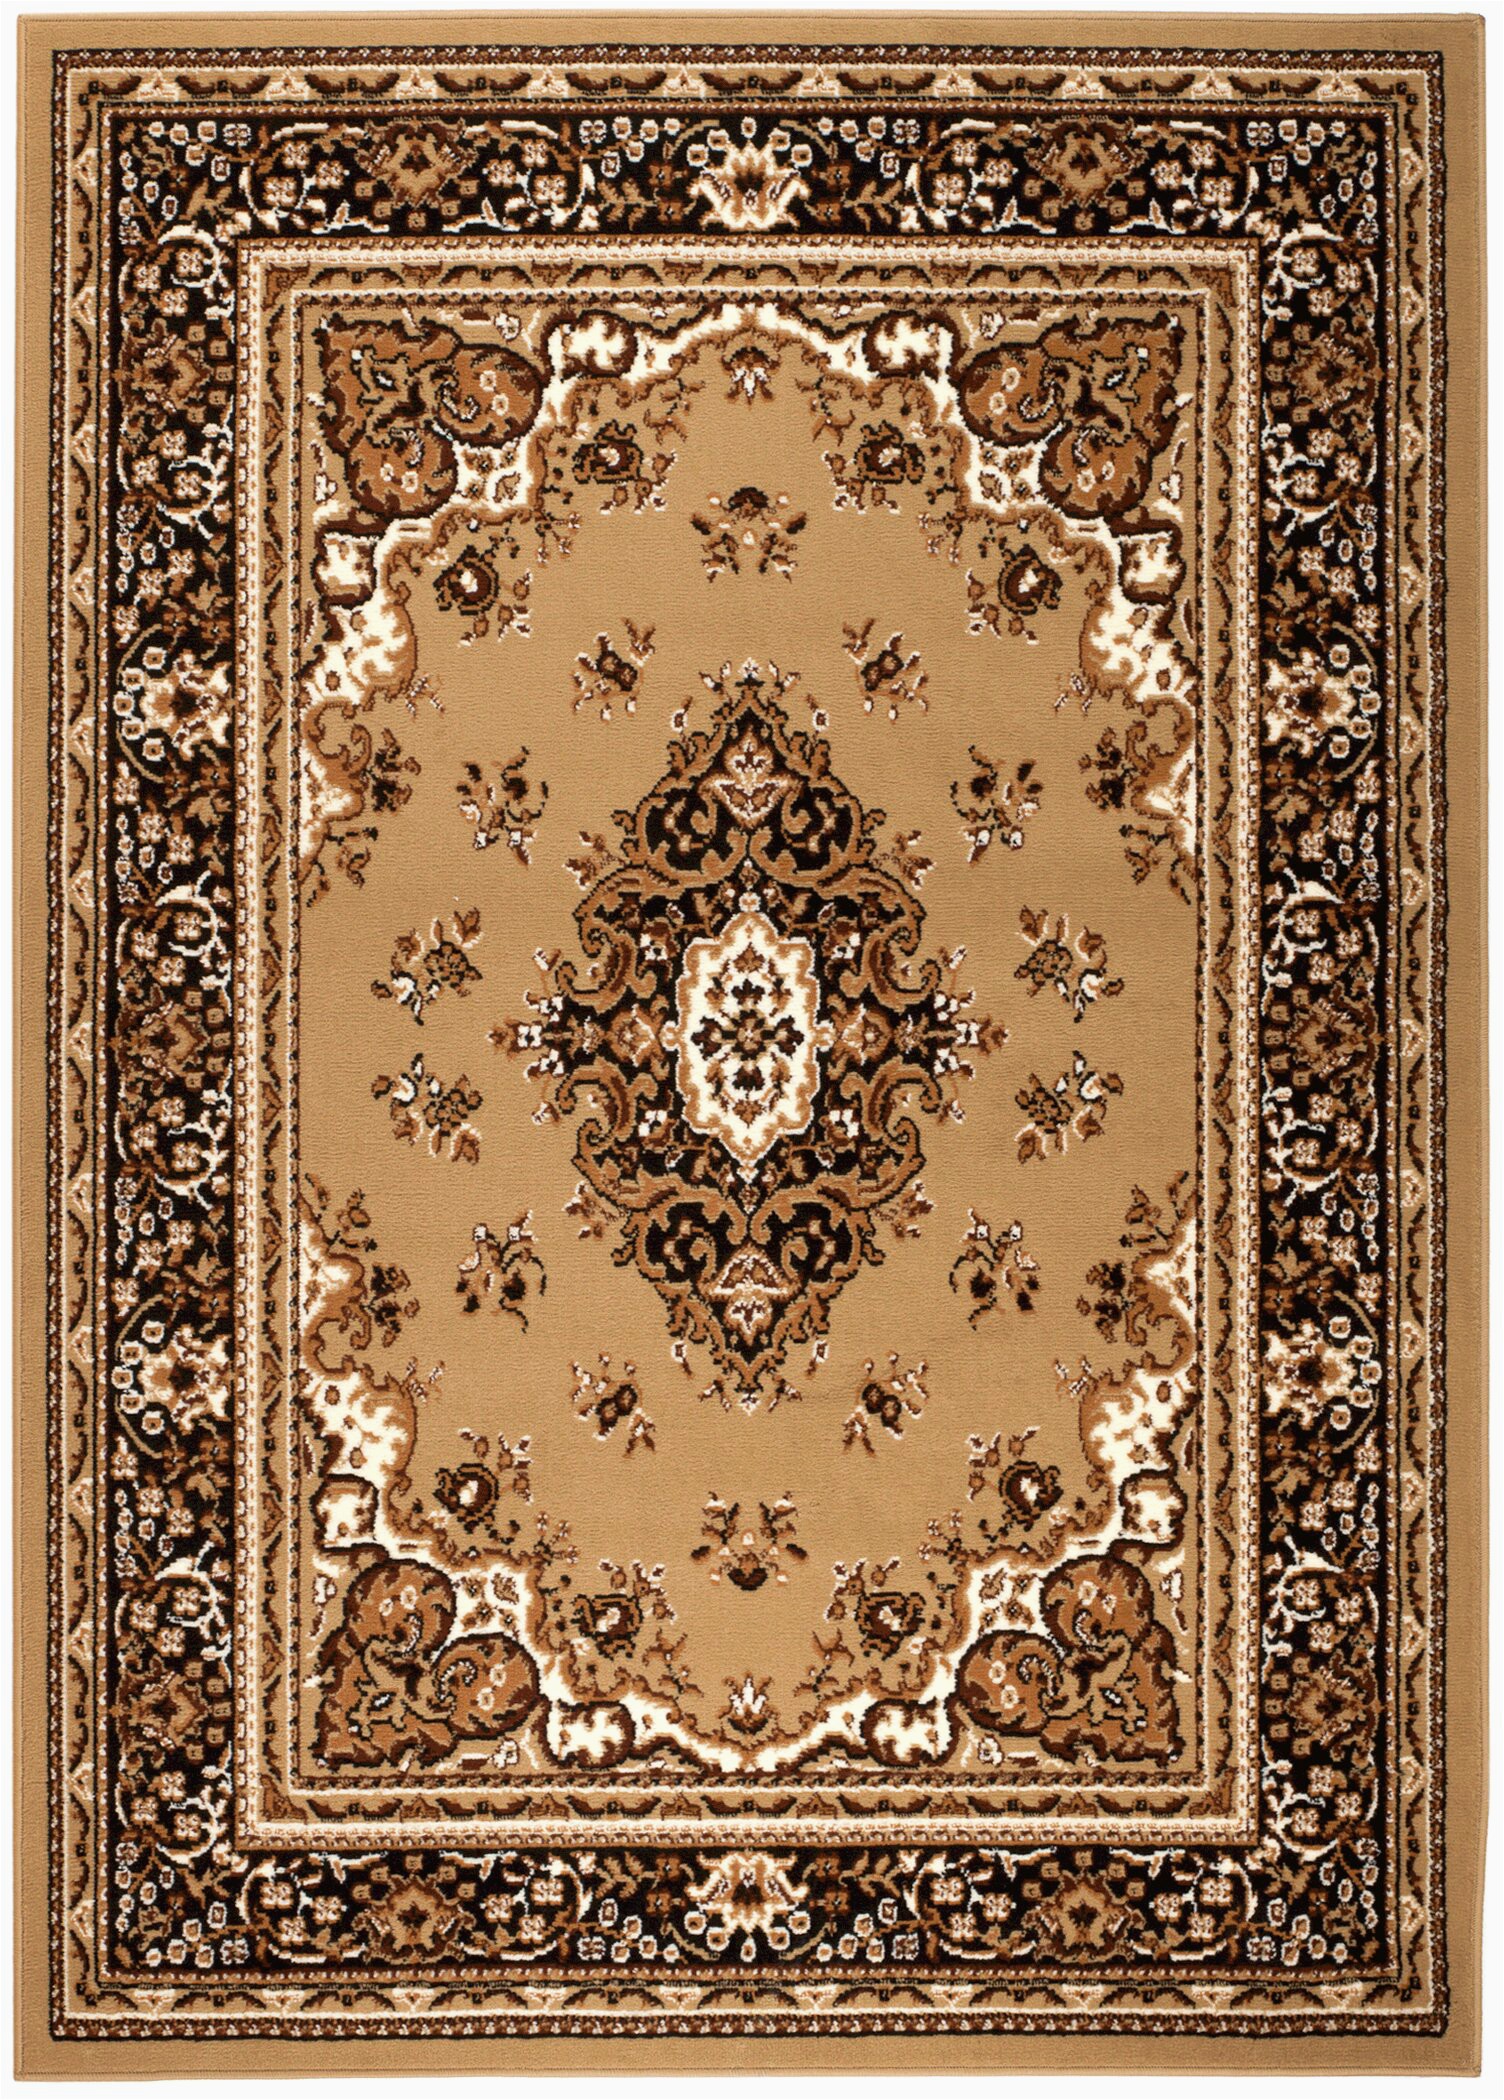 oppelo oriental beigebrown area rug